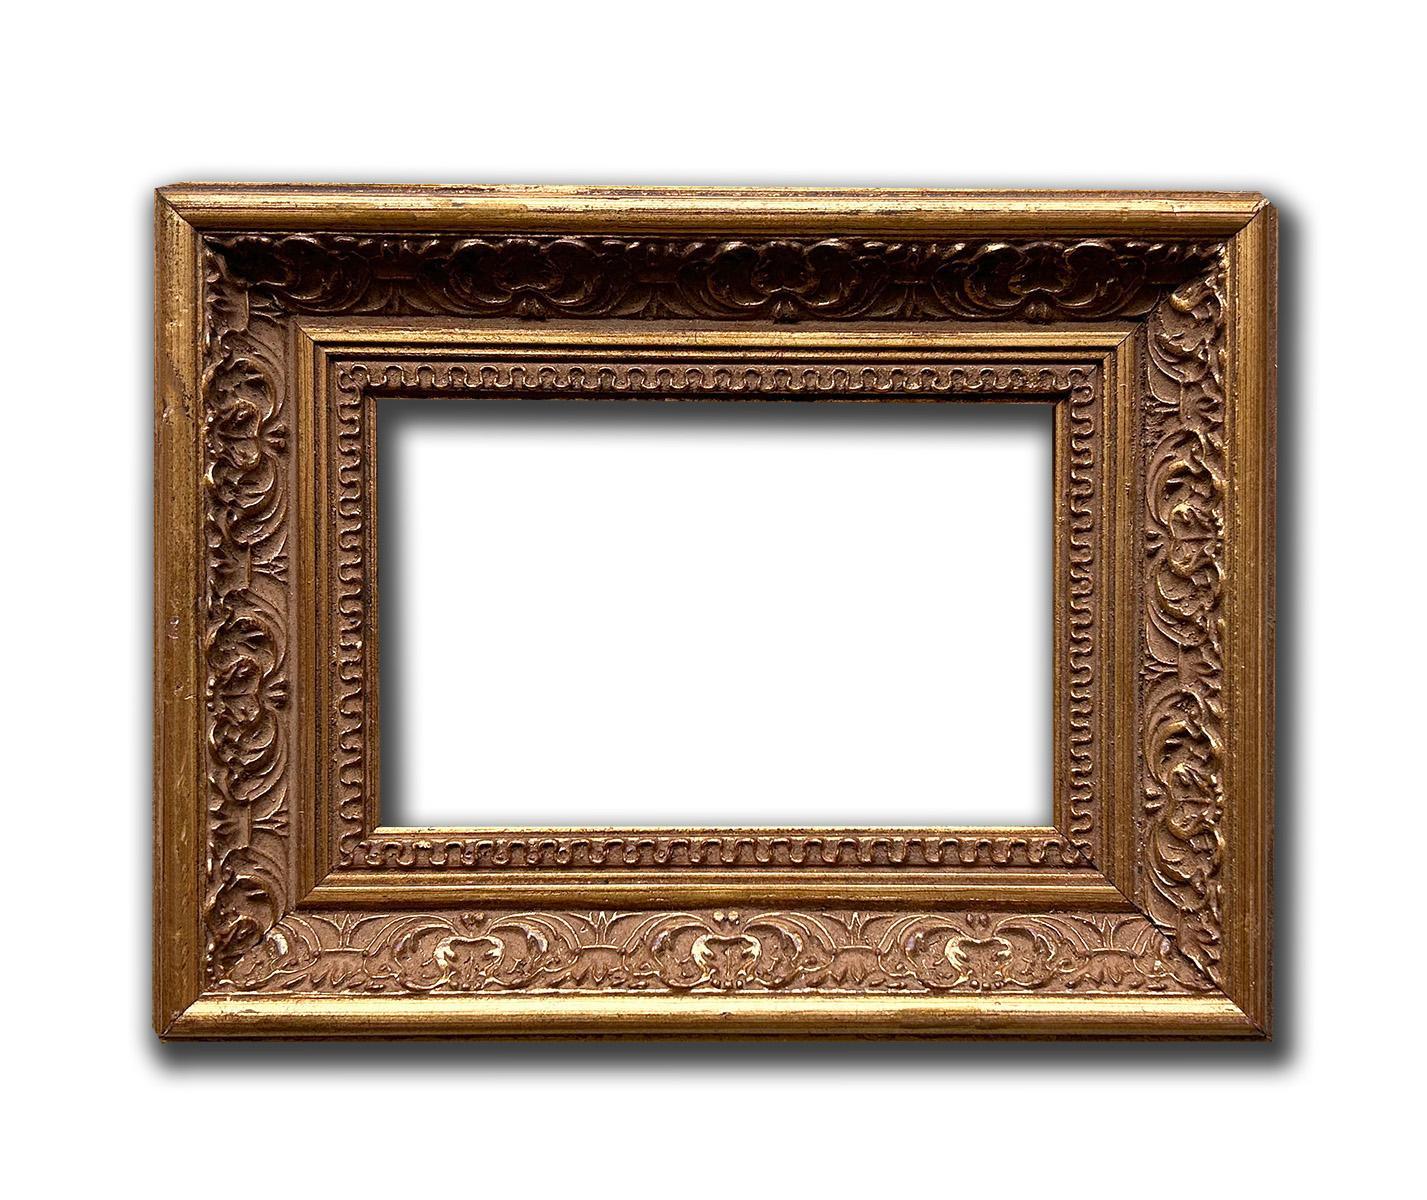 10x15 cm or 4x6 ins photo frame